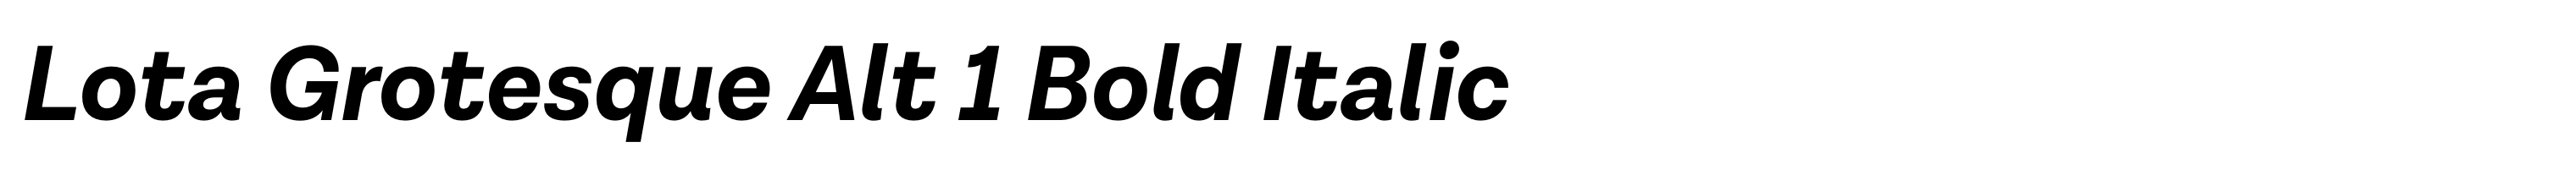 Lota Grotesque Alt 1 Bold Italic